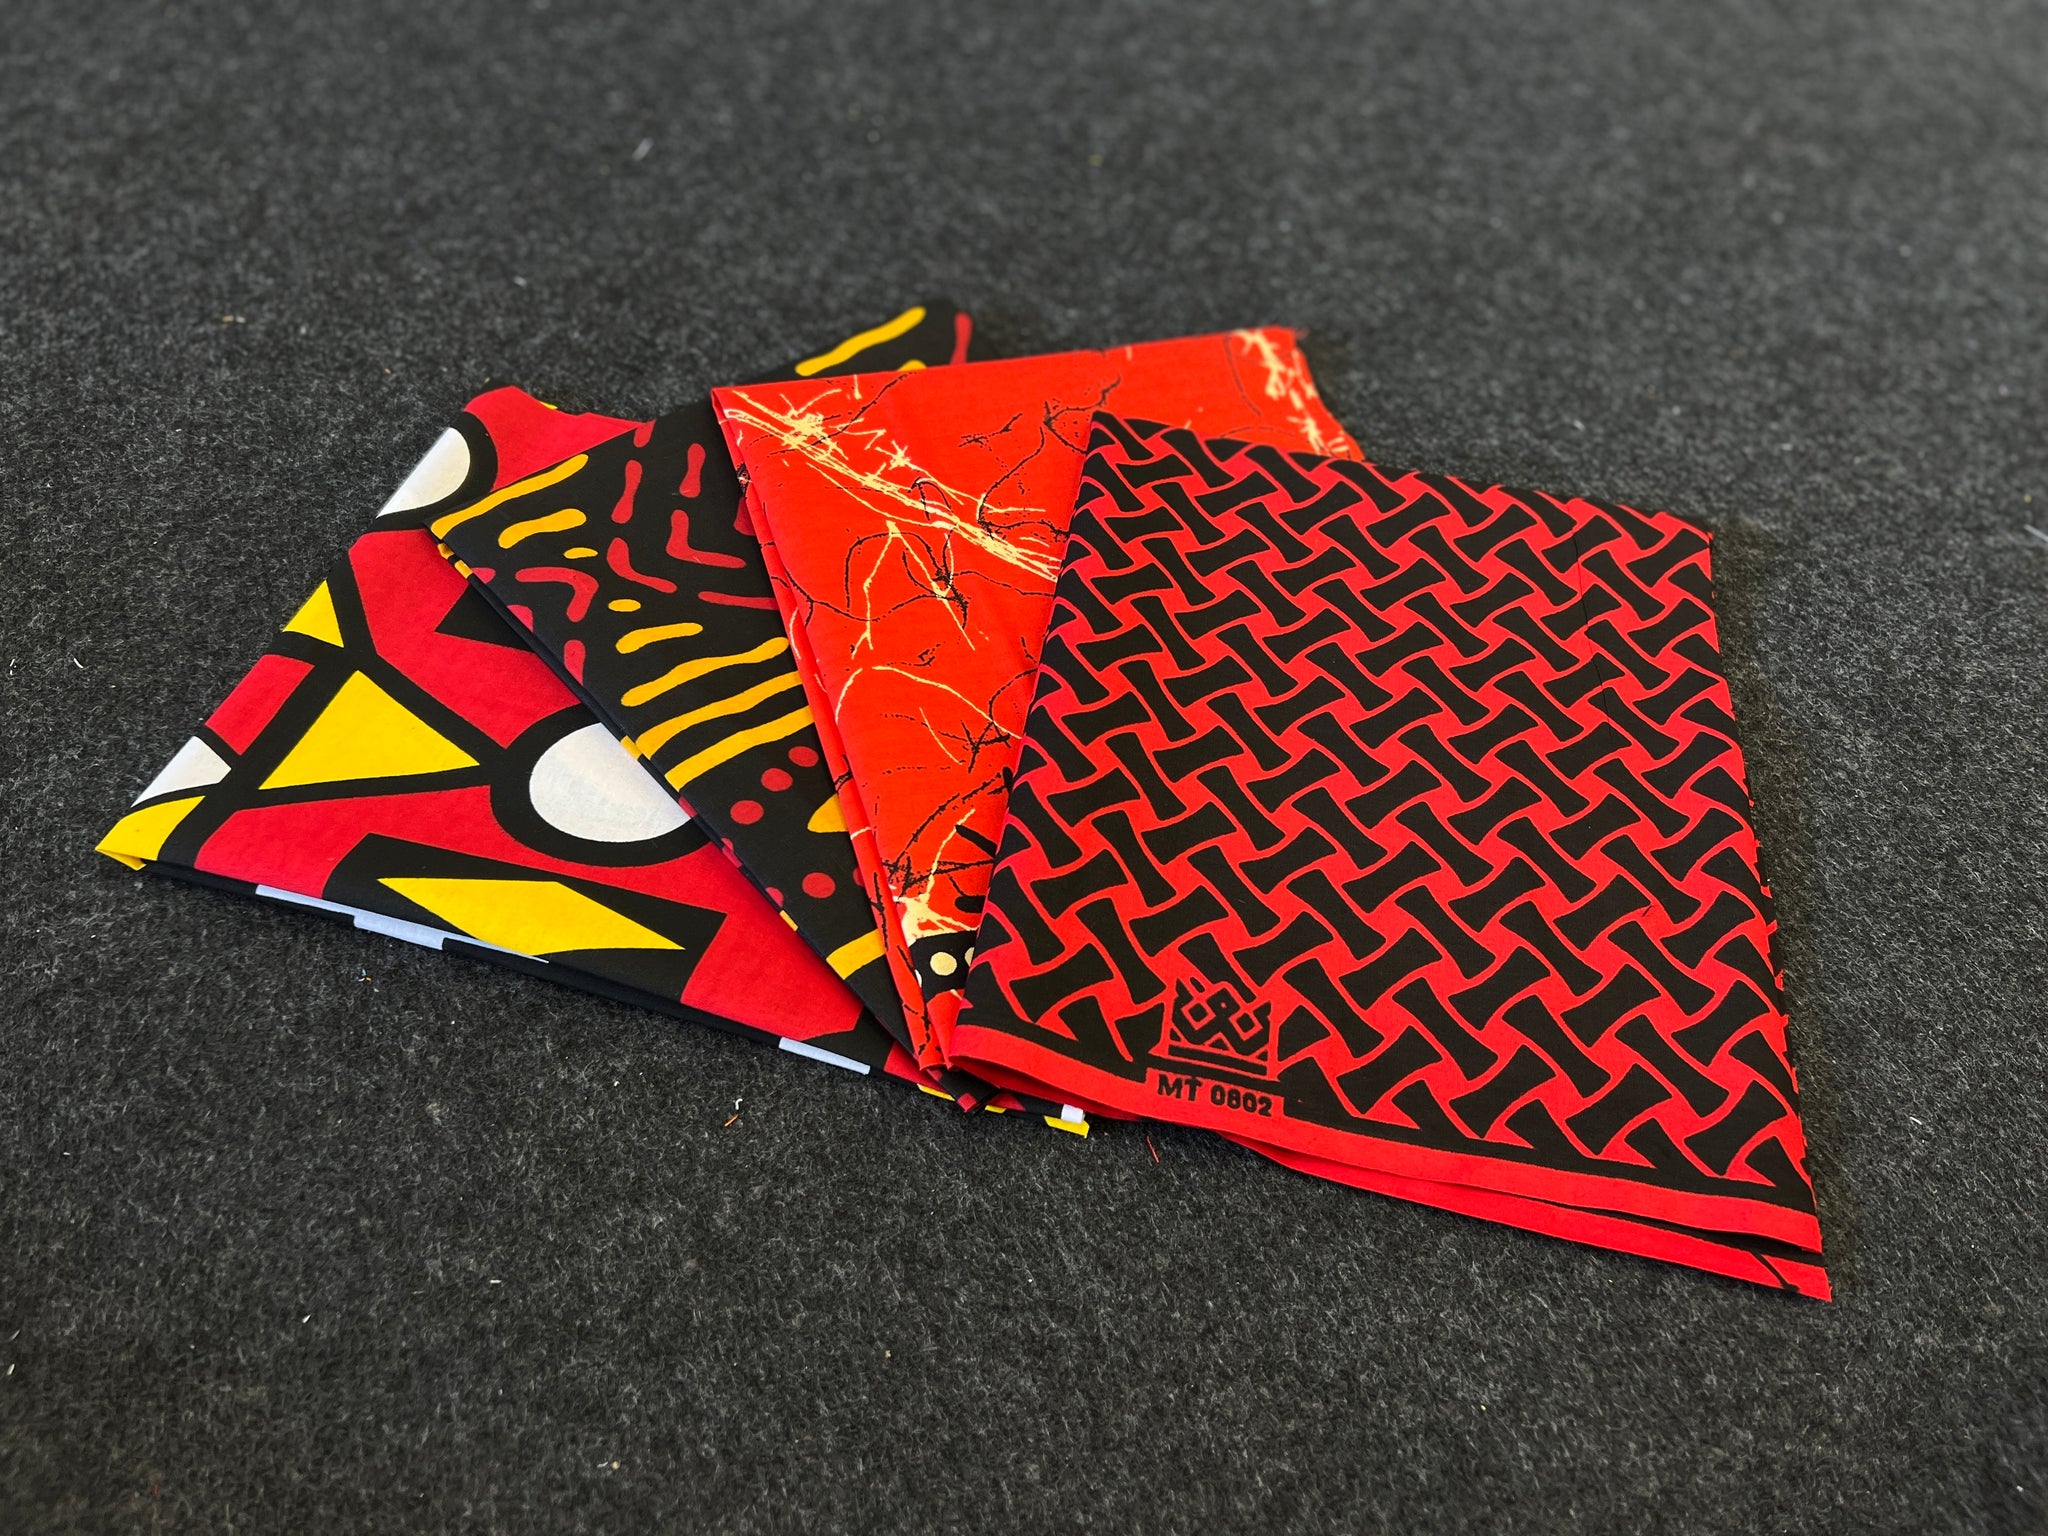 4 Fat quarters - Rode Quiltstoffen / Patchwork stoffen - Afrikaanse print stof